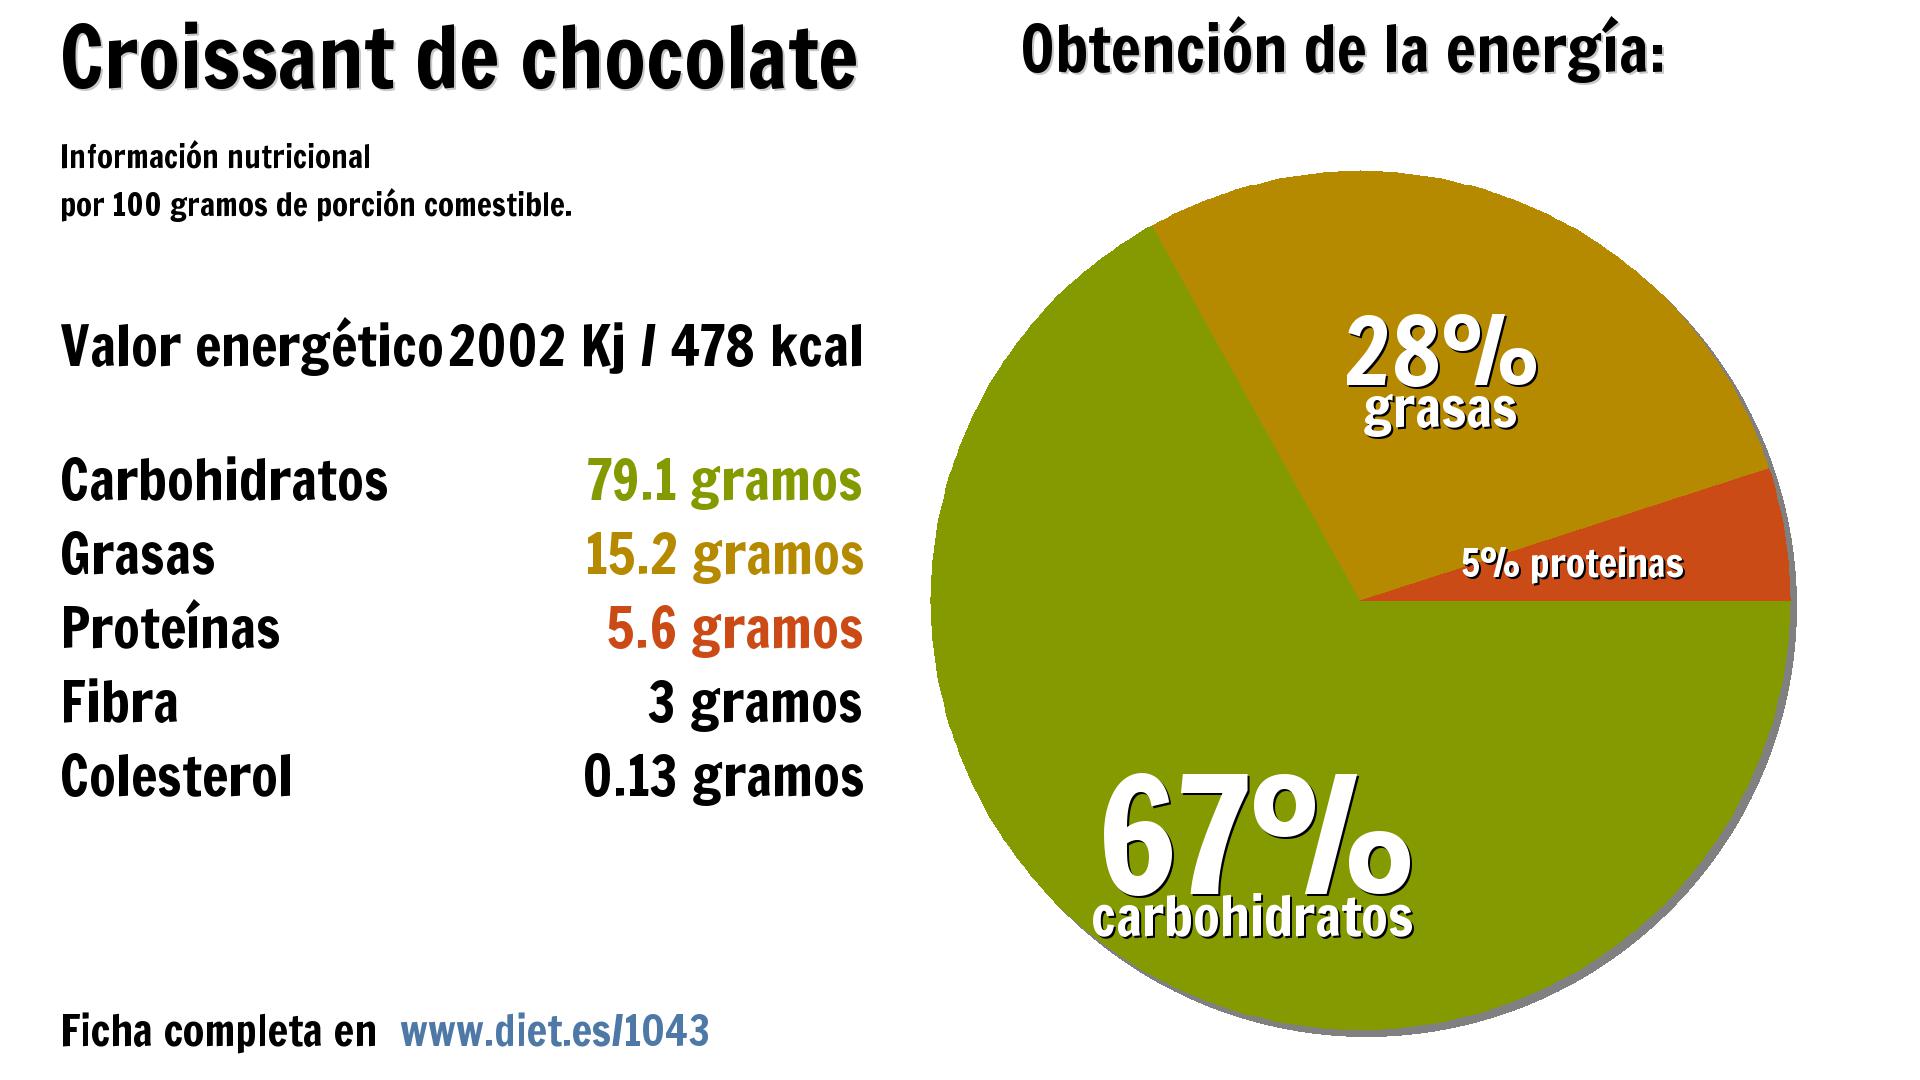 Croissant de chocolate: energía 2002 Kj, carbohidratos 79 g., grasas 15 g., proteínas 6 g. y fibra 3 g.